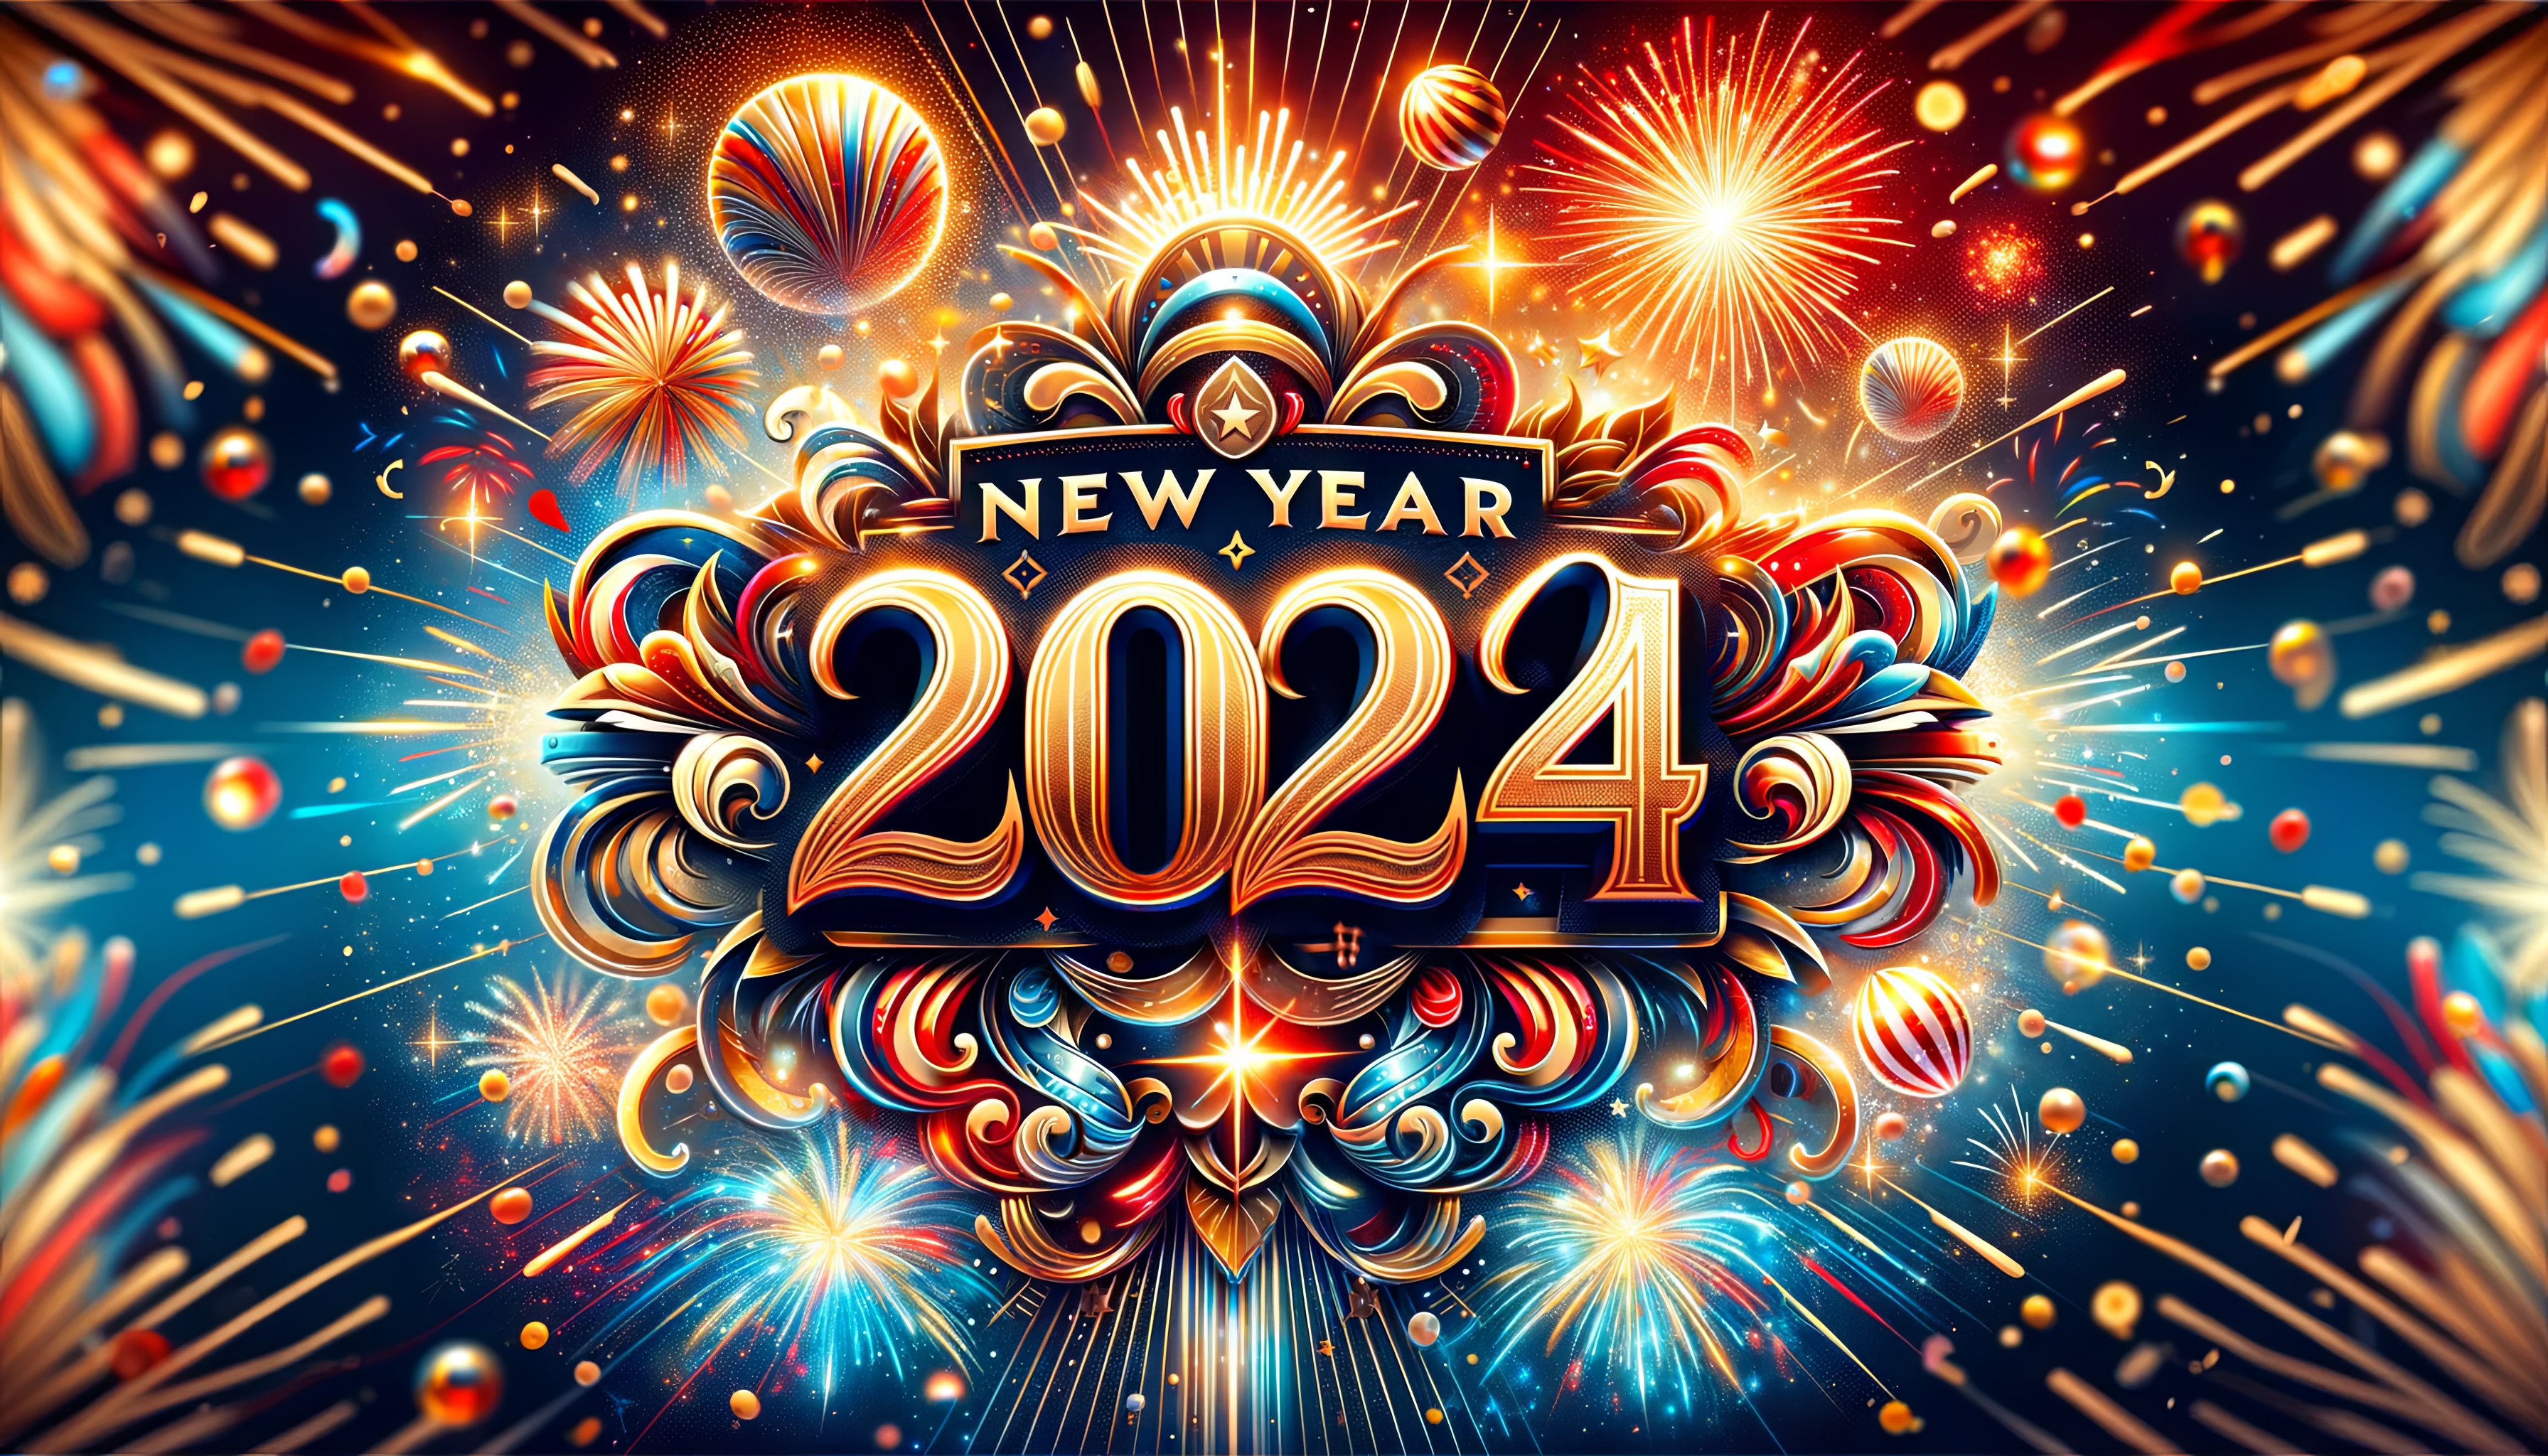 Vibrant New Year 2024 fireworks celebration HD wallpaper and desktop background.